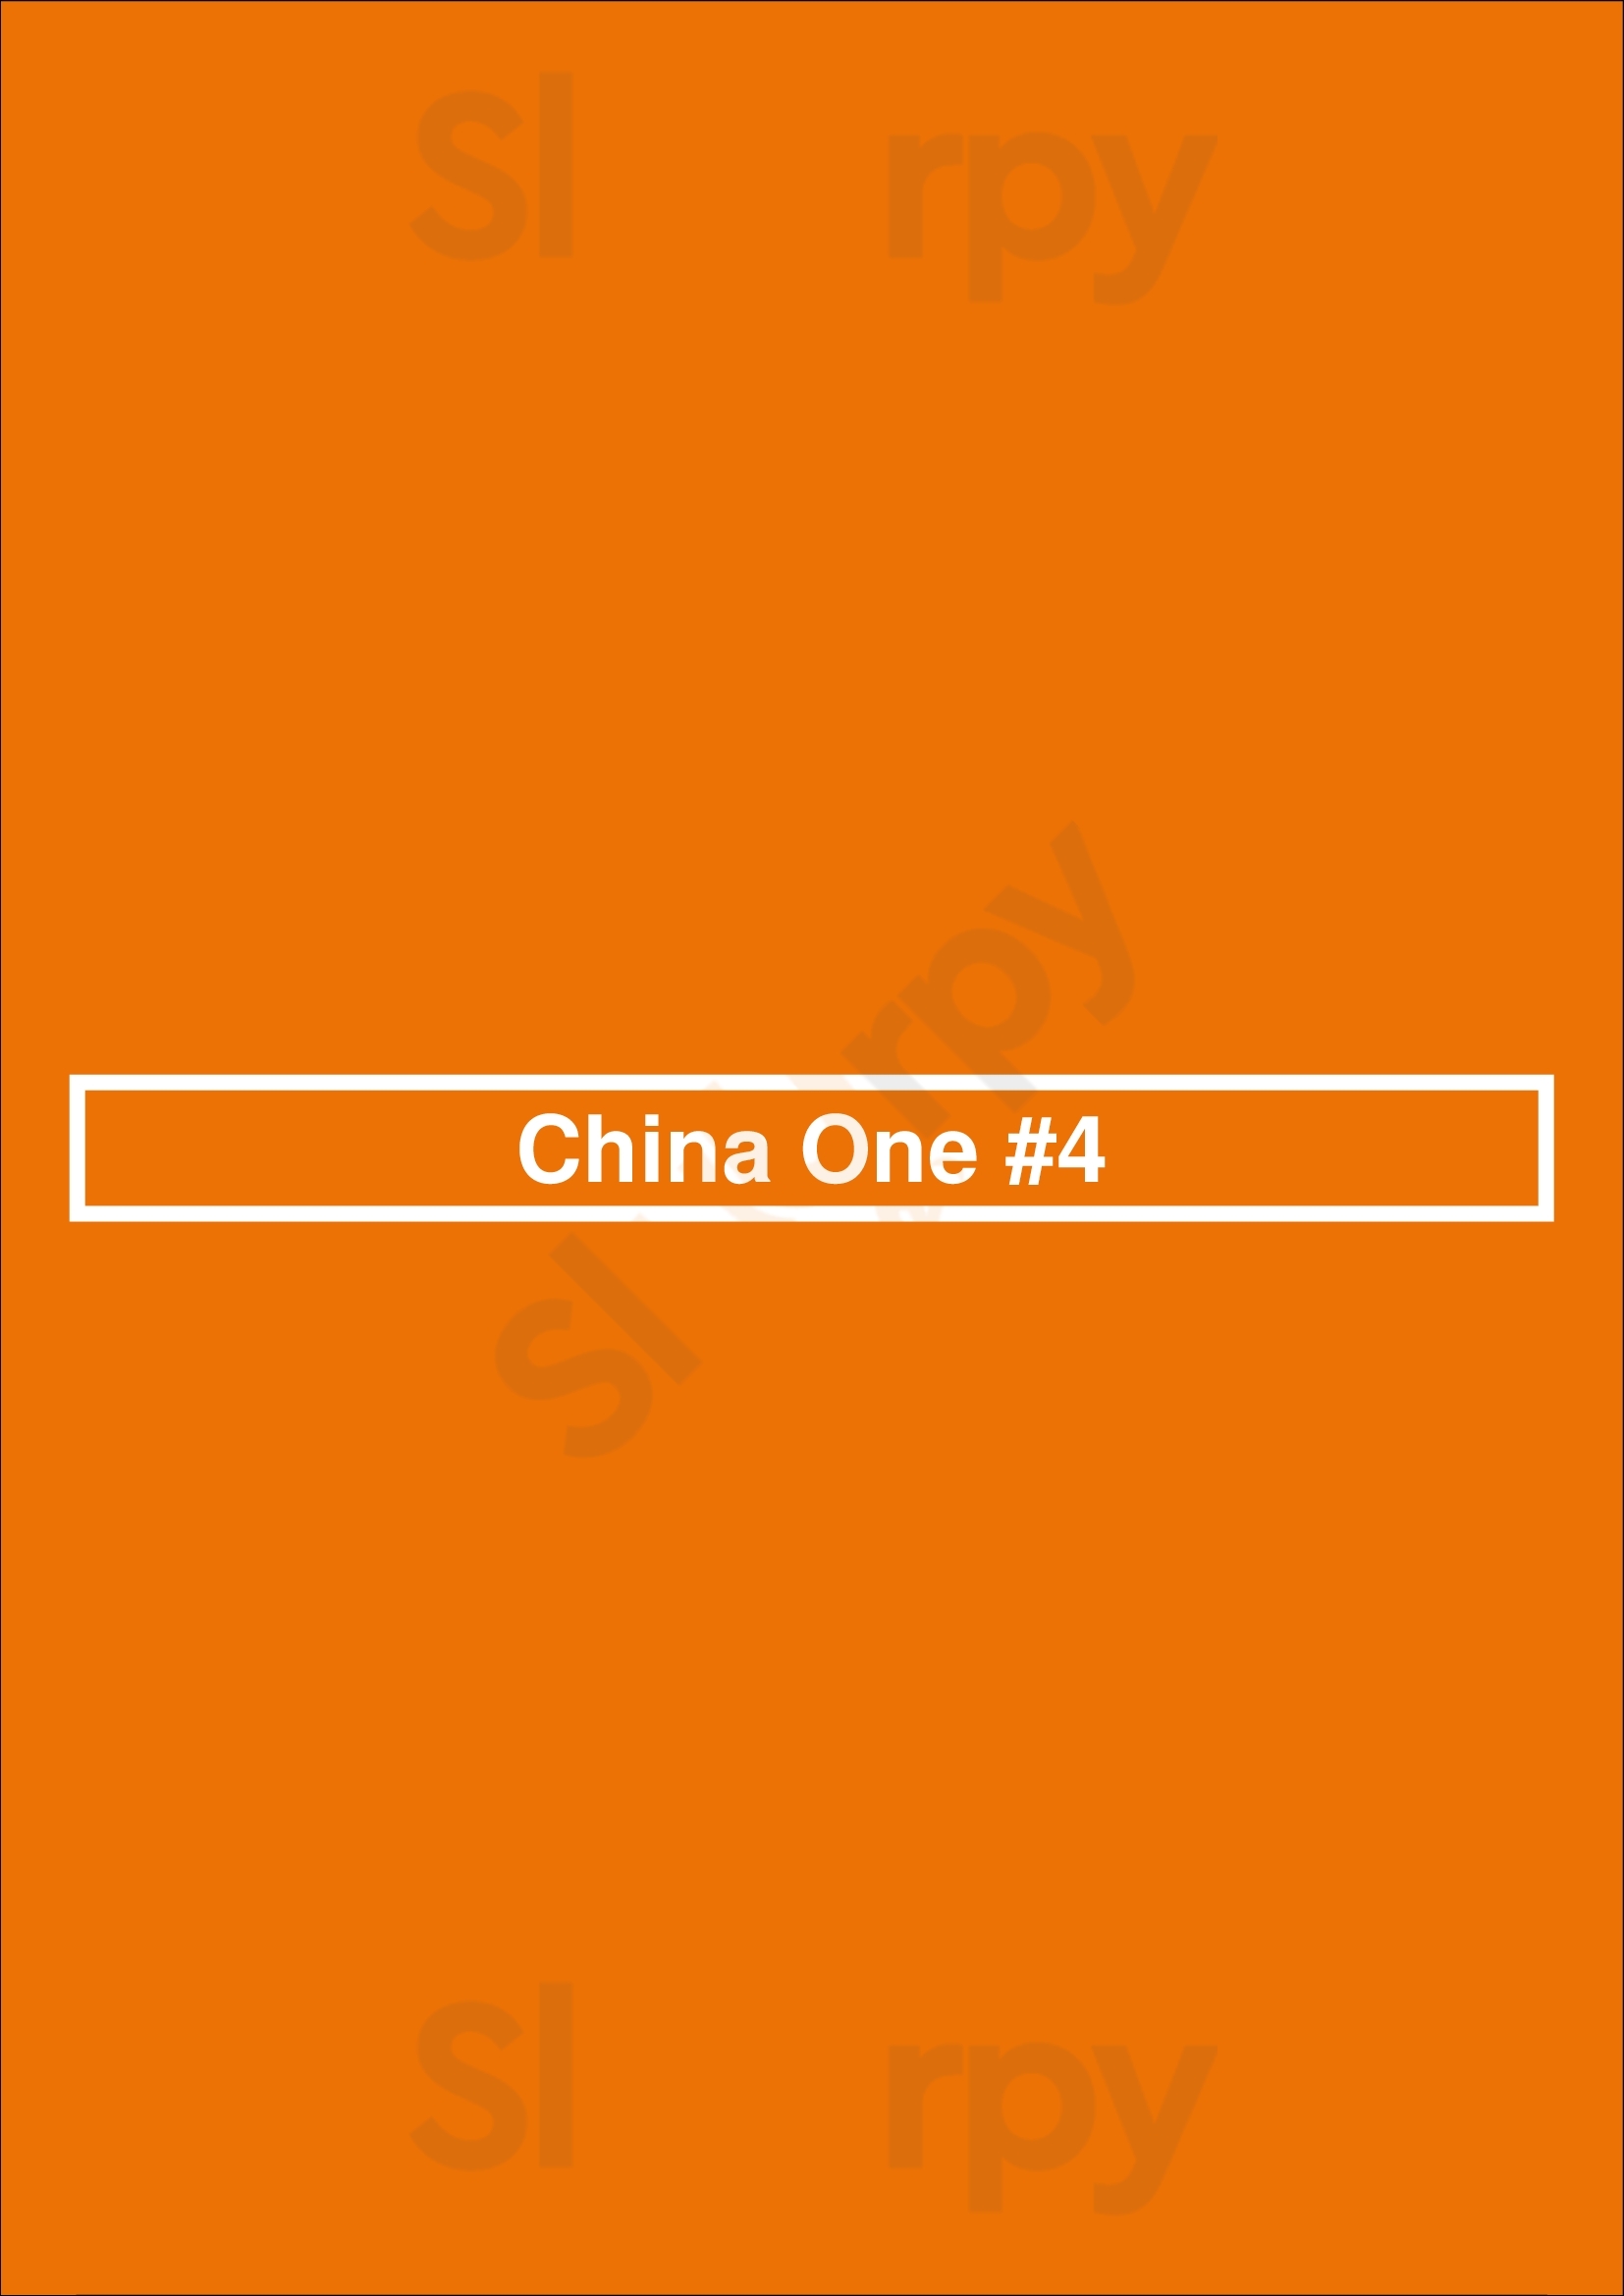 China One #4 Houston Menu - 1